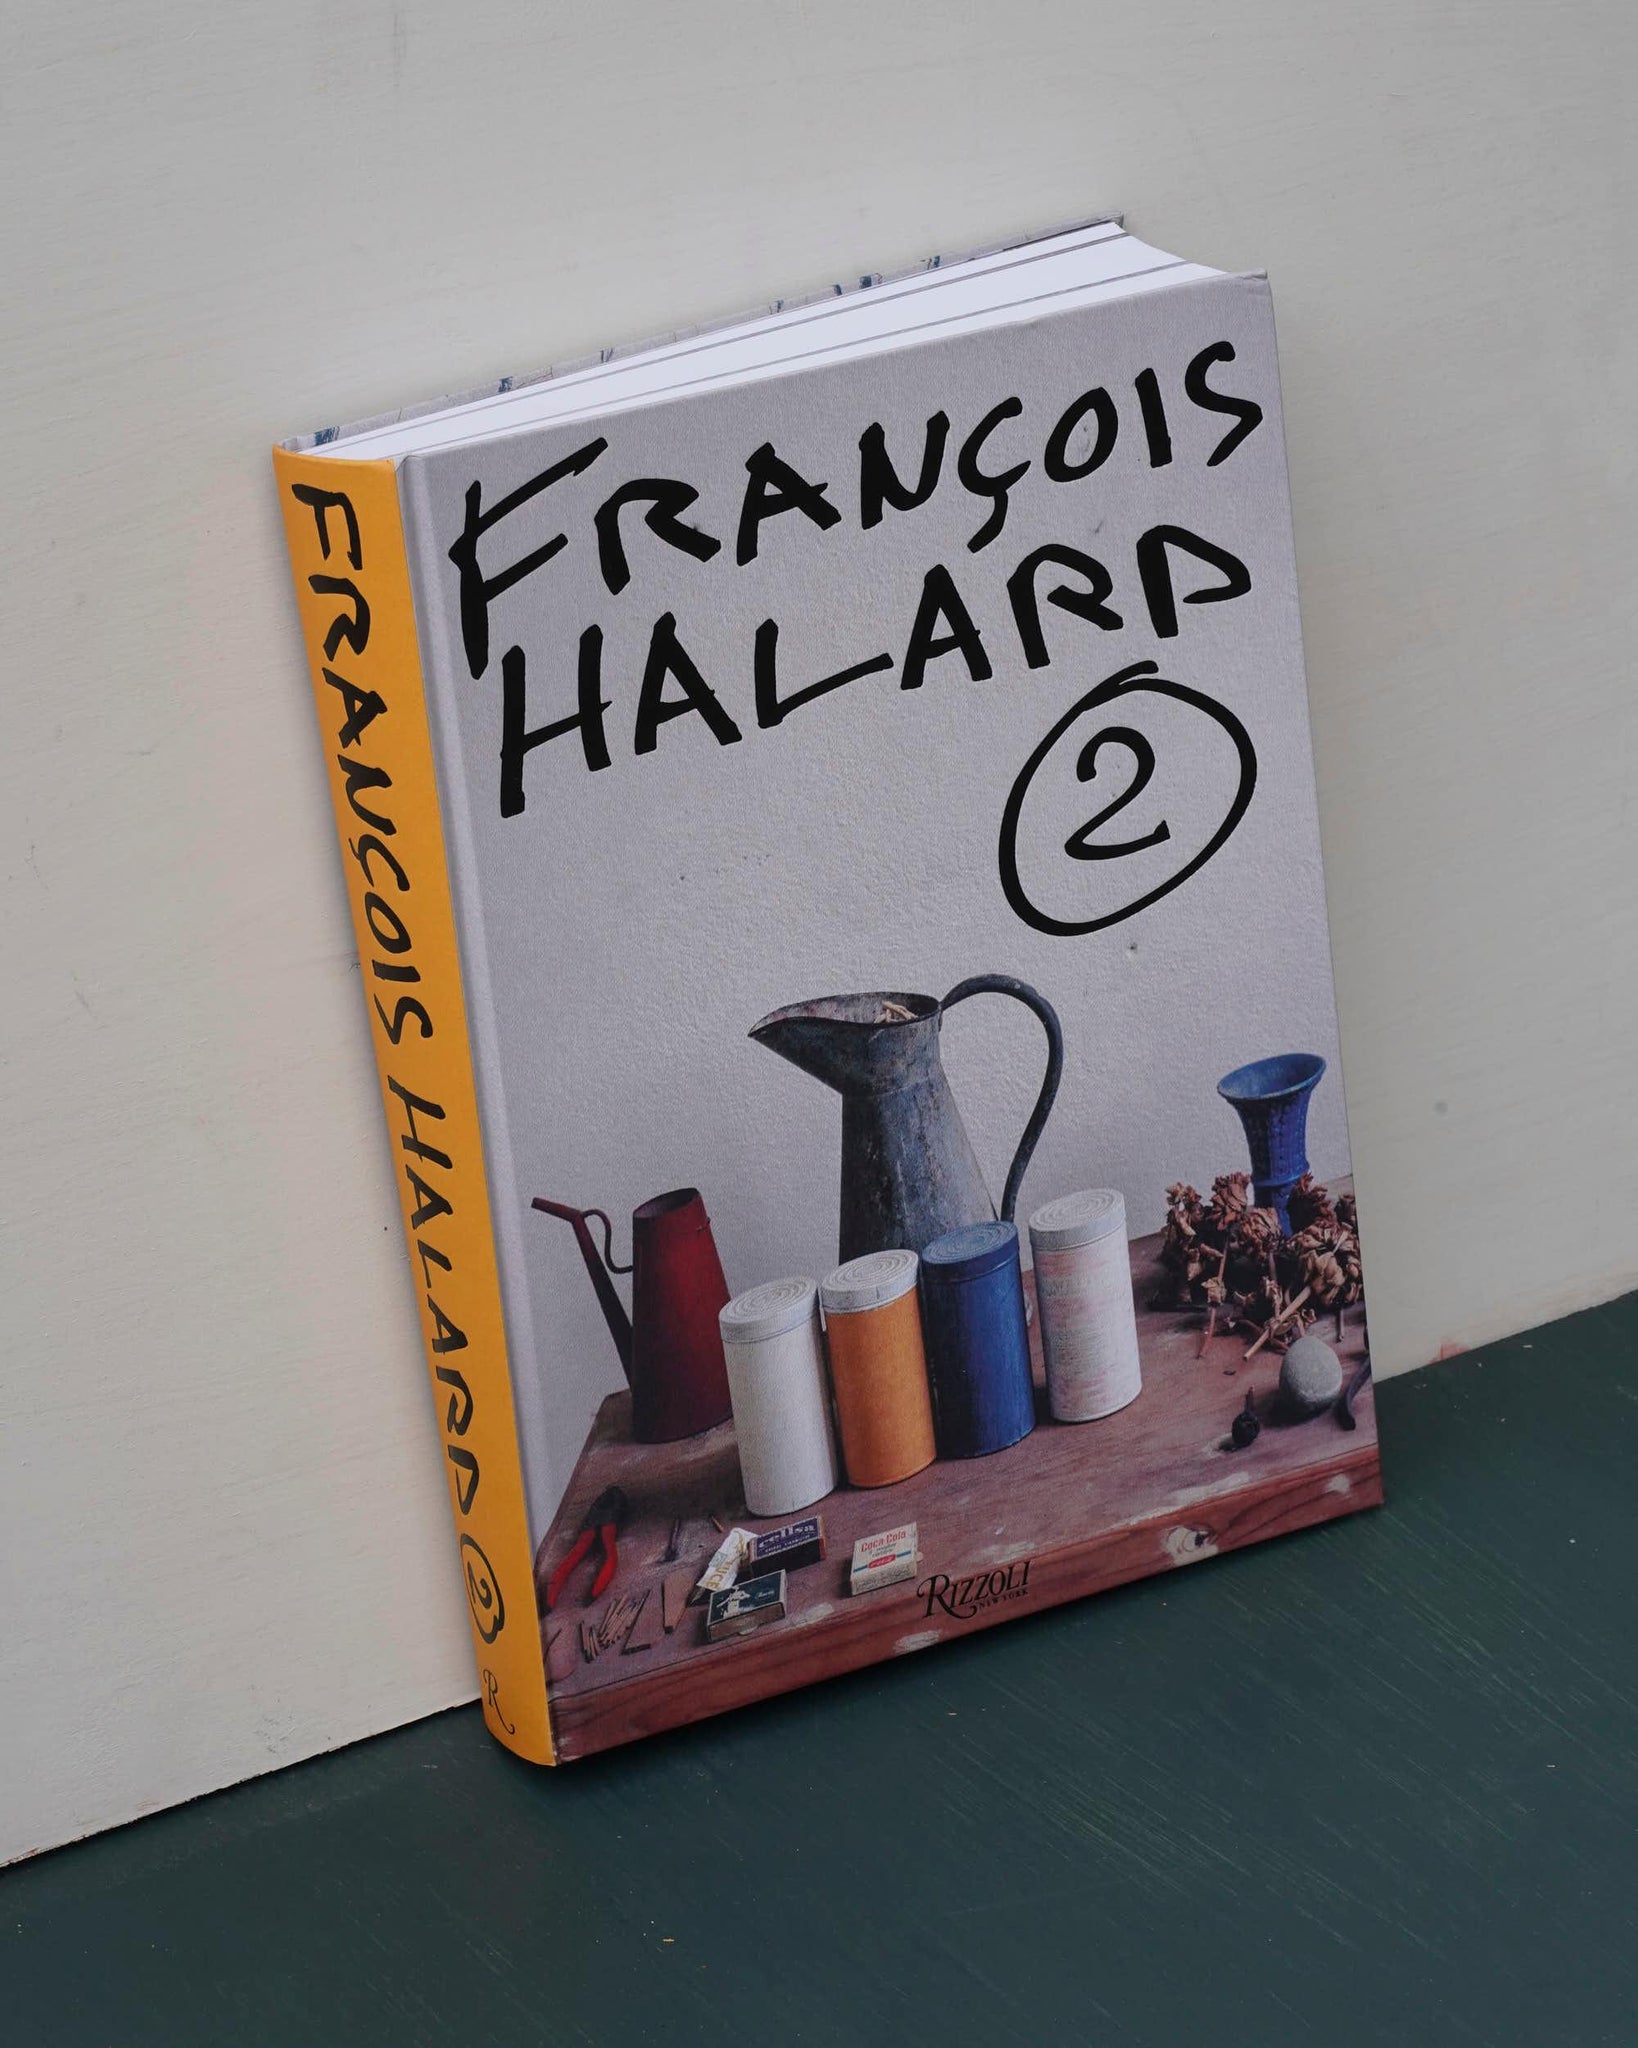 A Visual Diary - Francois Halard - Folkways